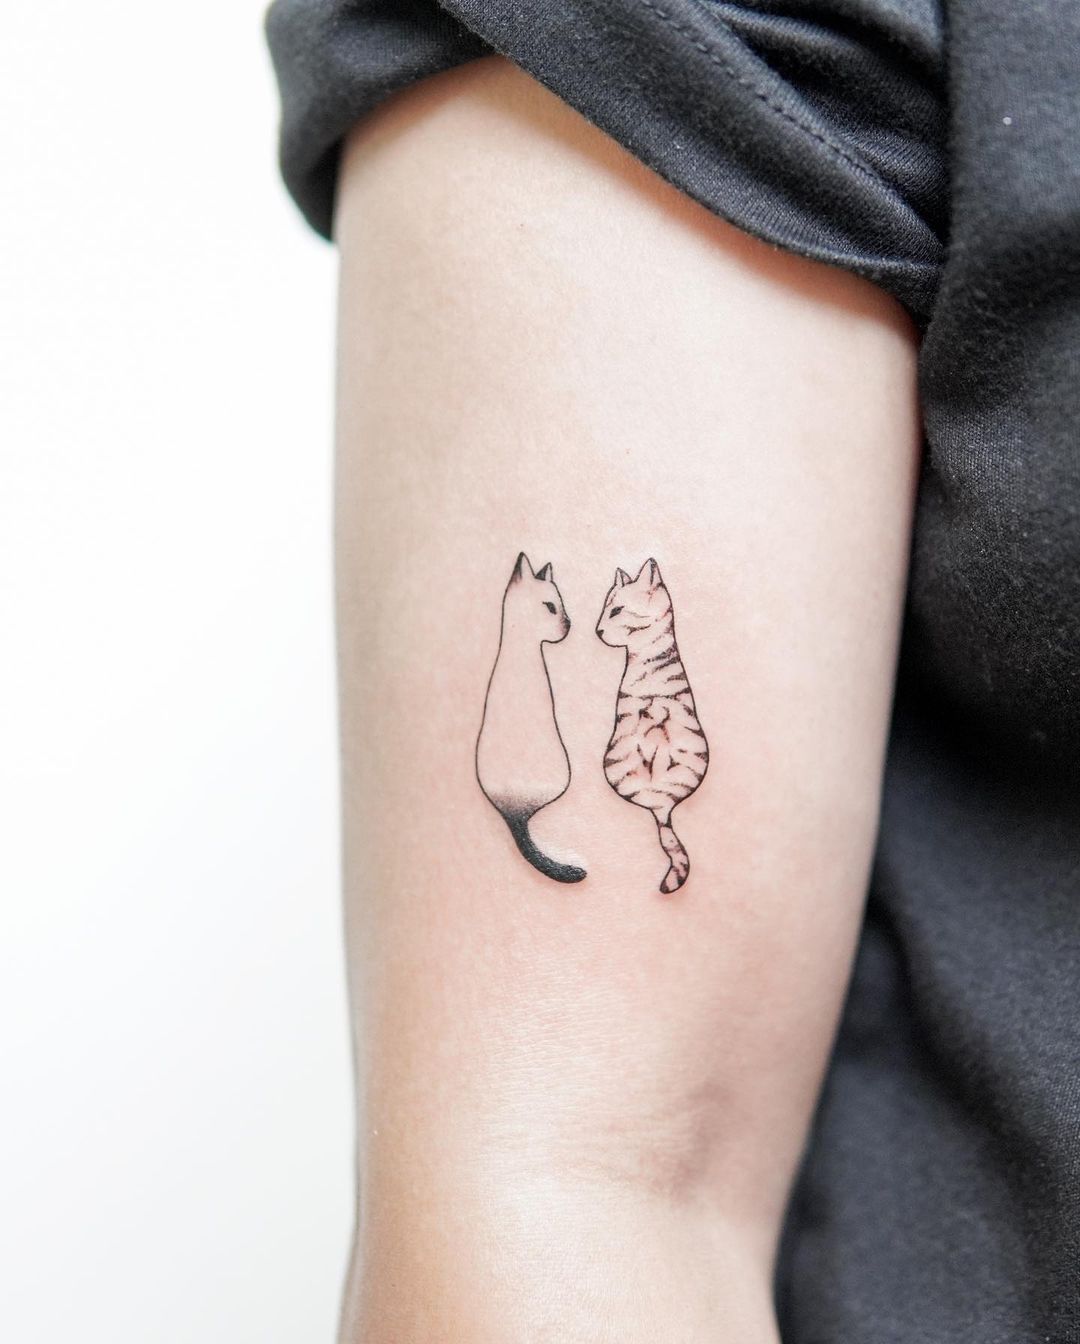 Creative and Unique Small/Cute Tattoo Ideas | Aliens Tattoo